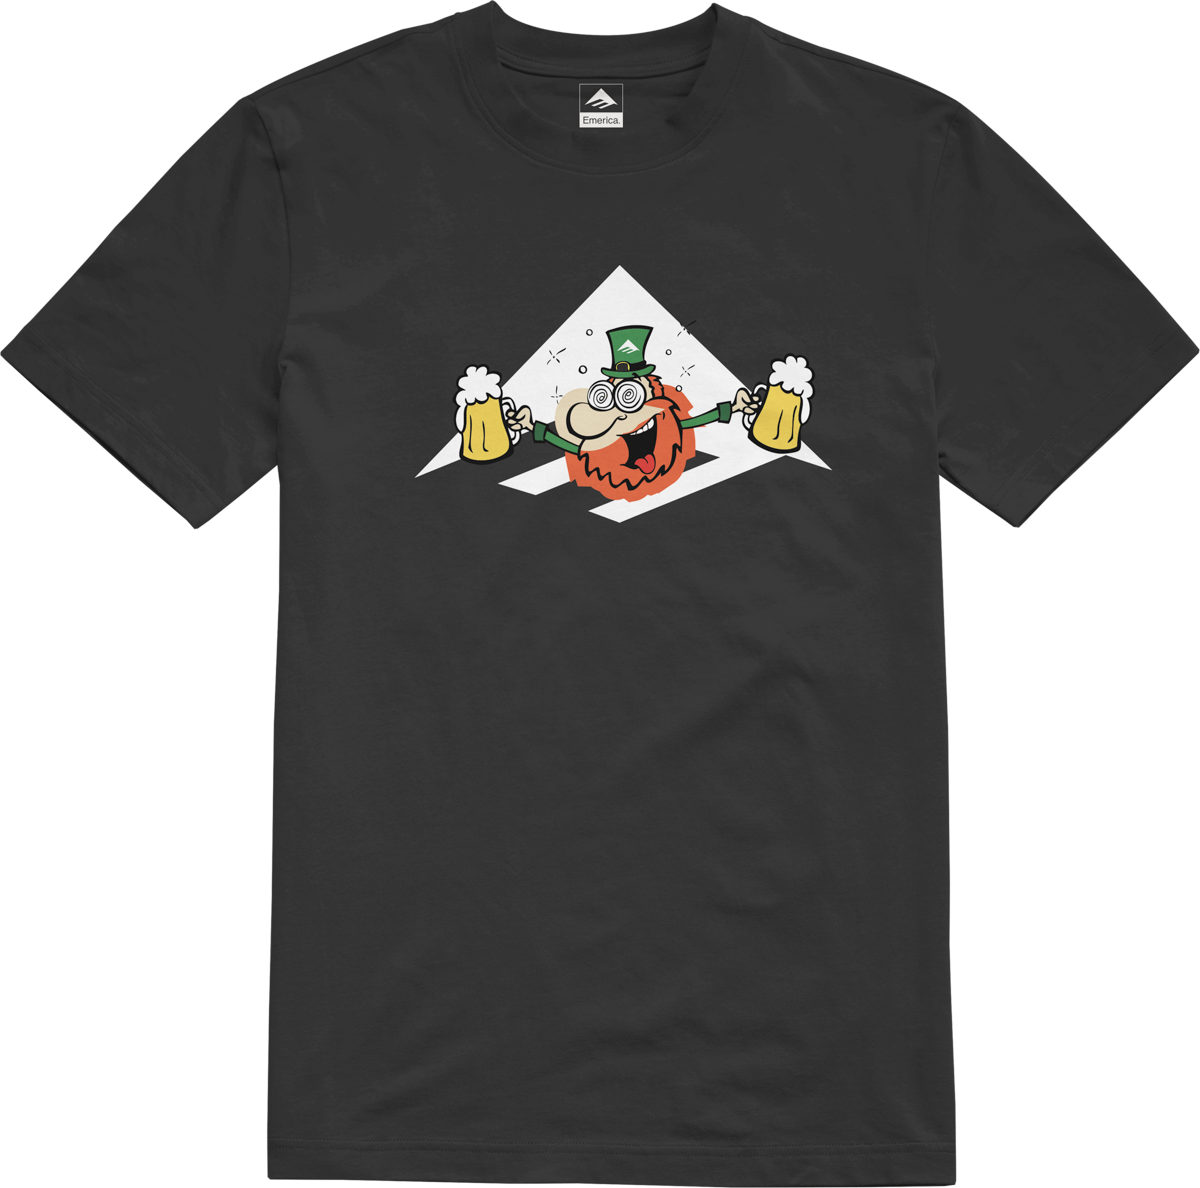 Emerica Mens Leprechaun Triangle Tee Black T-Shirt